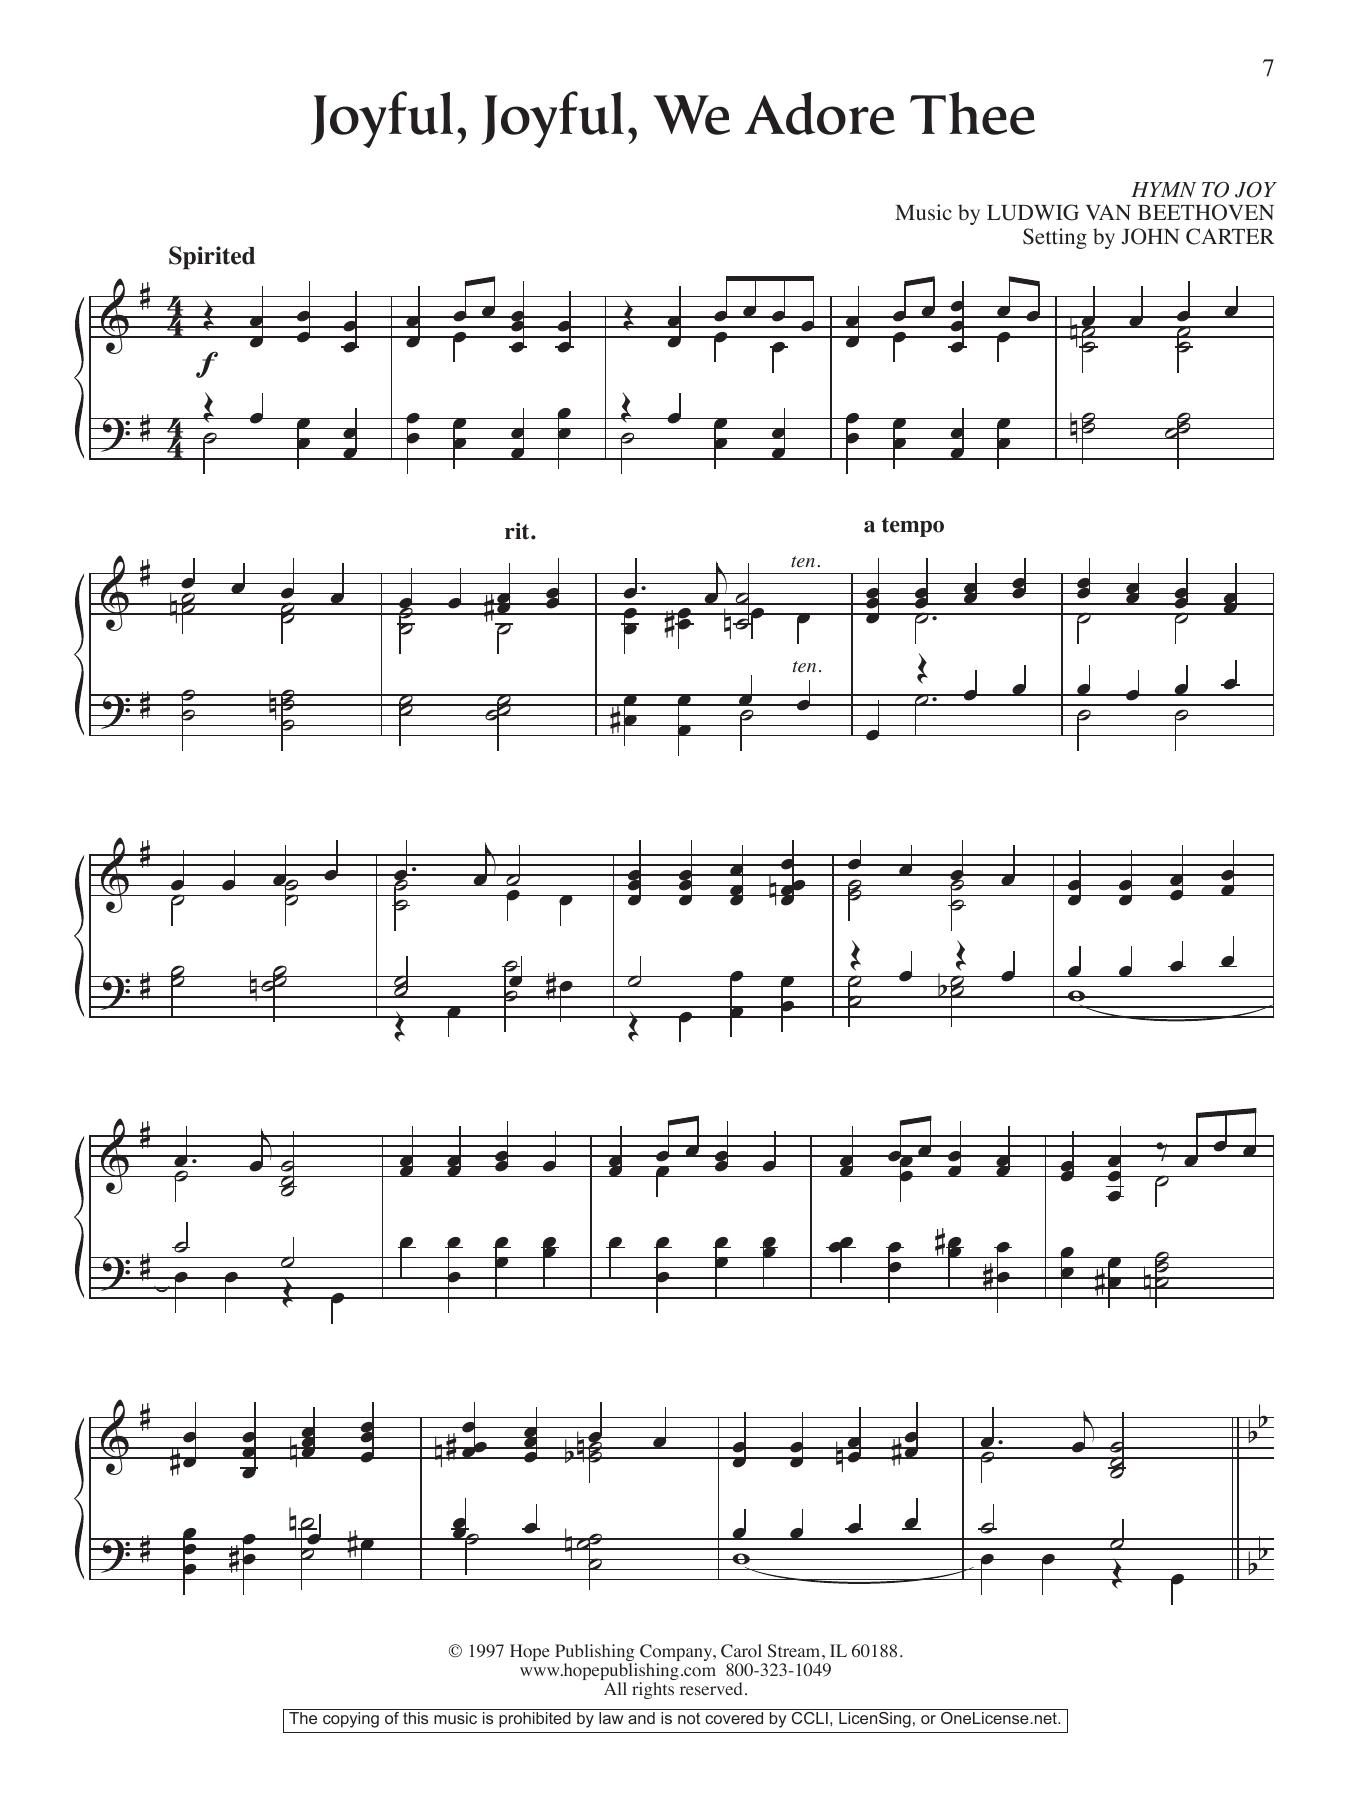 John Carter Joyful, Joyful, We Adore Thee Sheet Music Notes & Chords for Piano Solo - Download or Print PDF